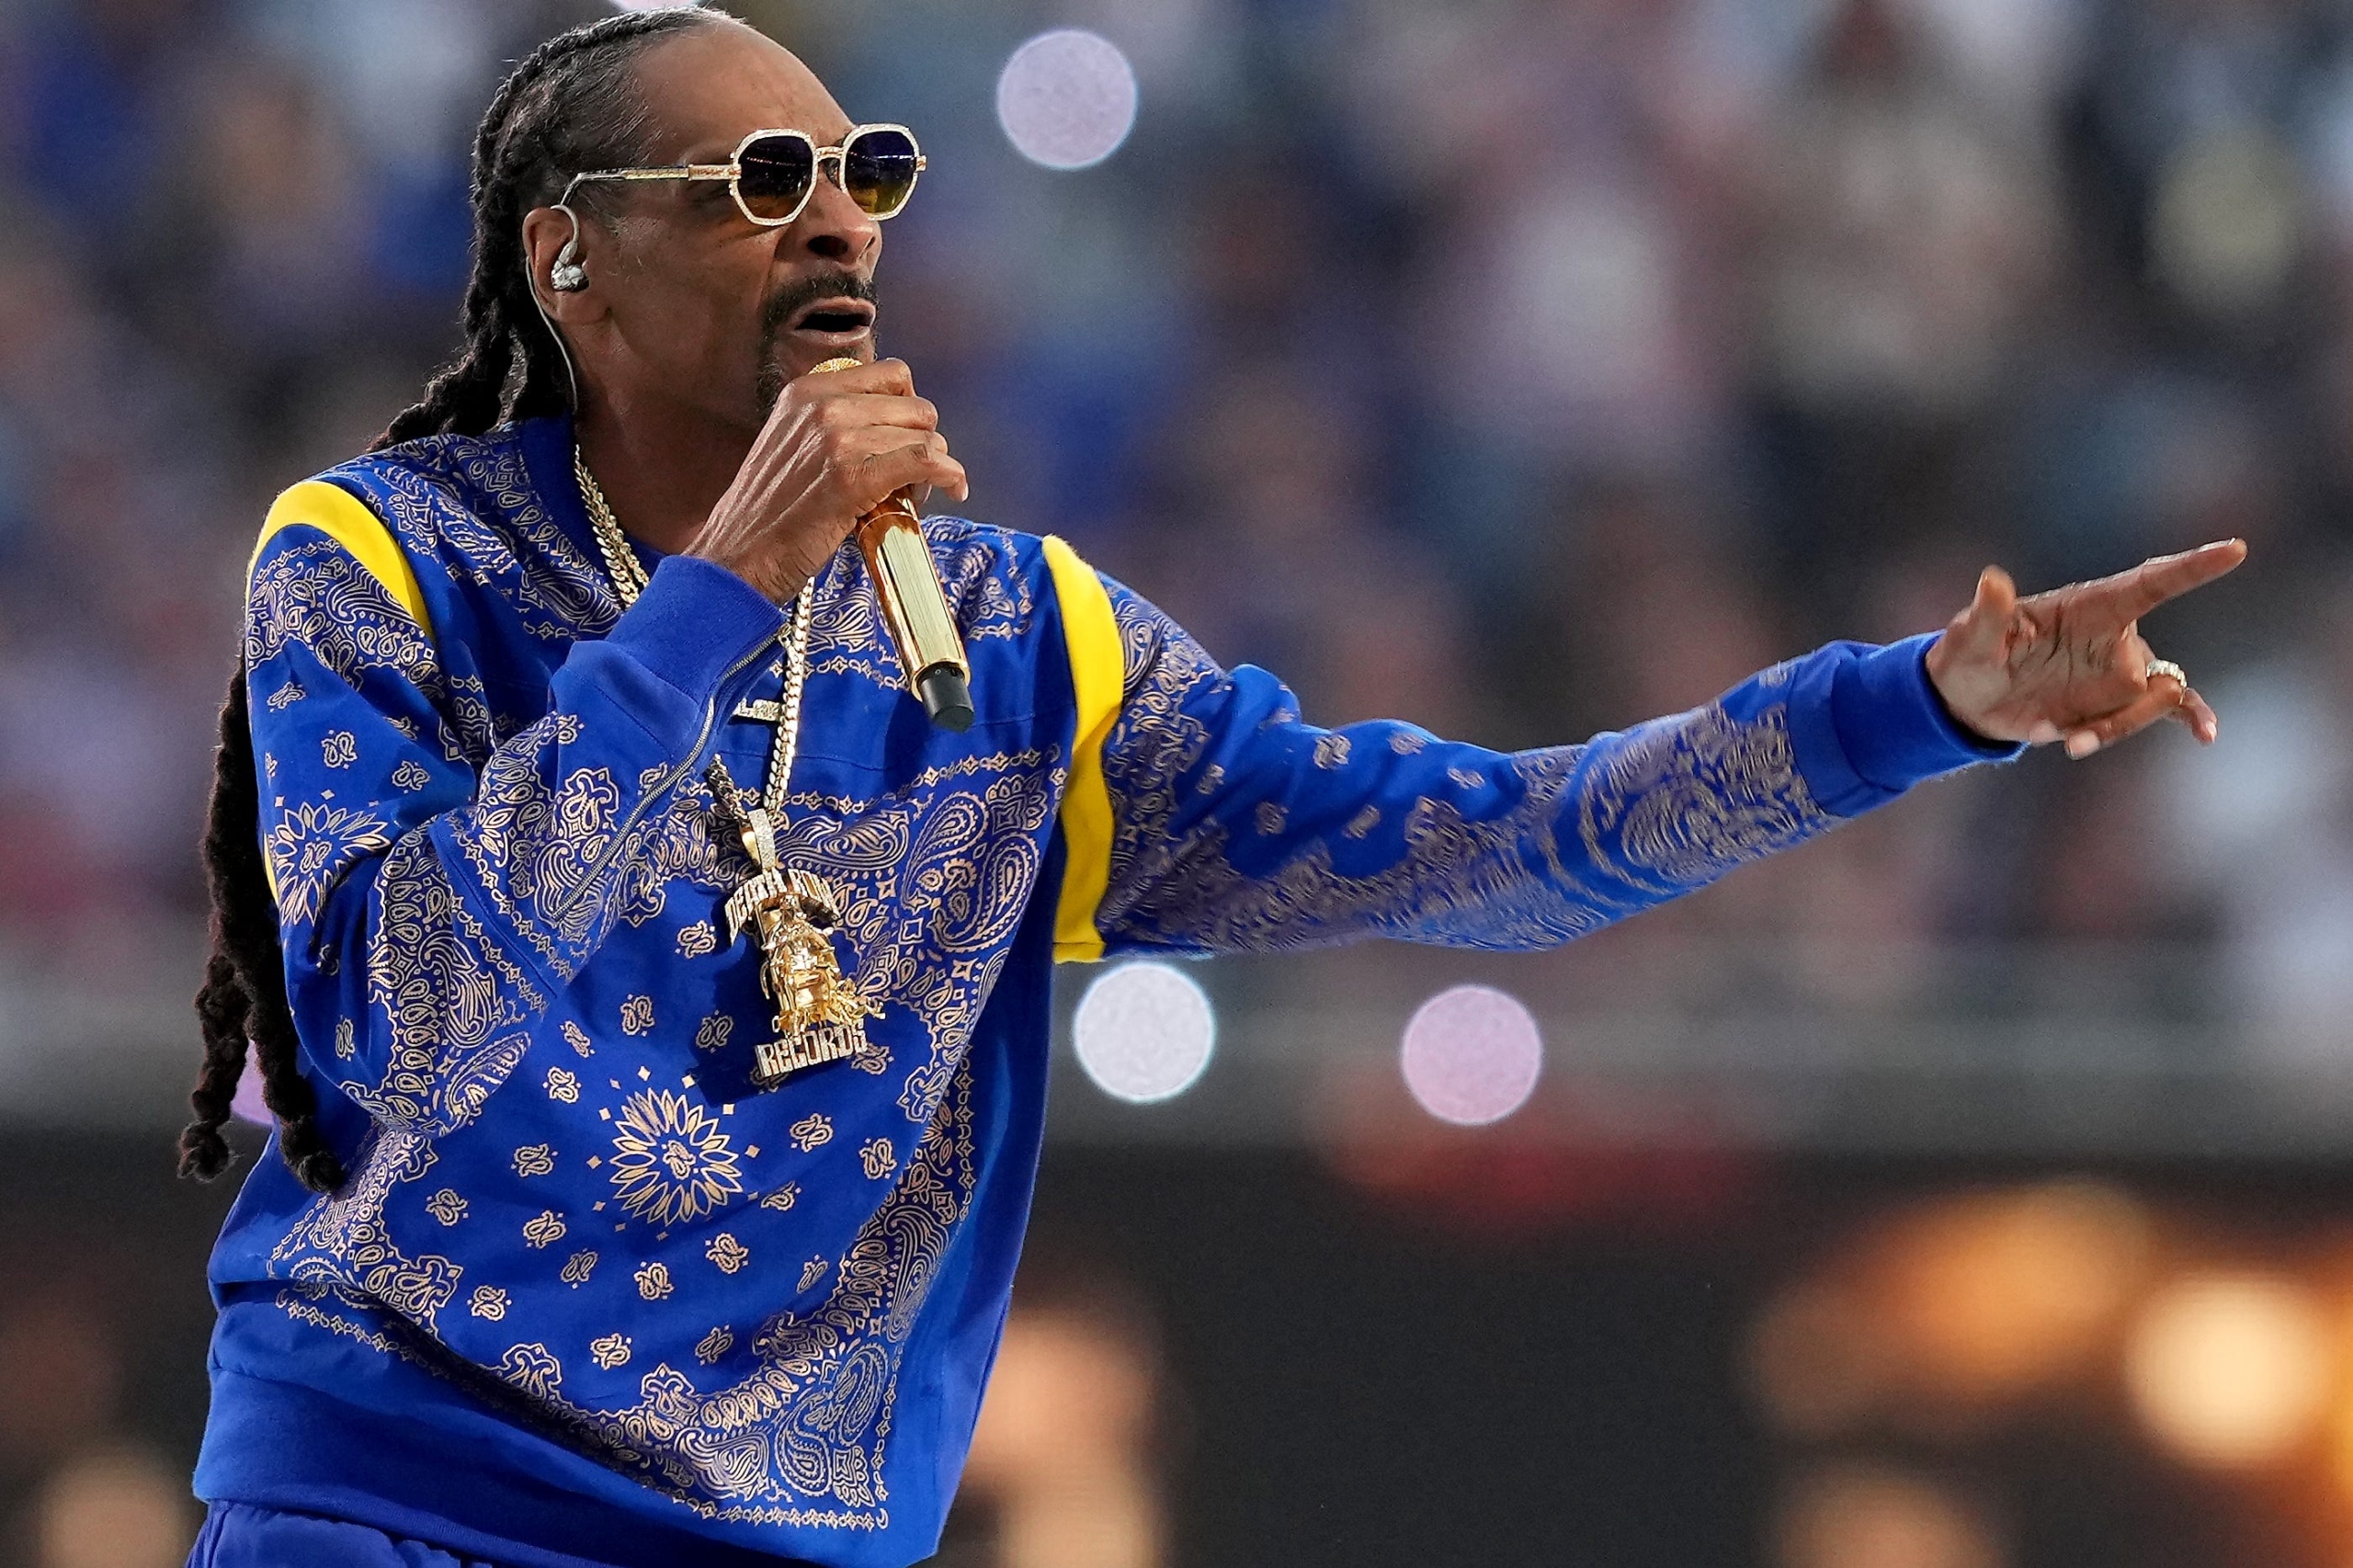 BREAKING: Snoop Dogg Wants to Buy the Ottawa Senators